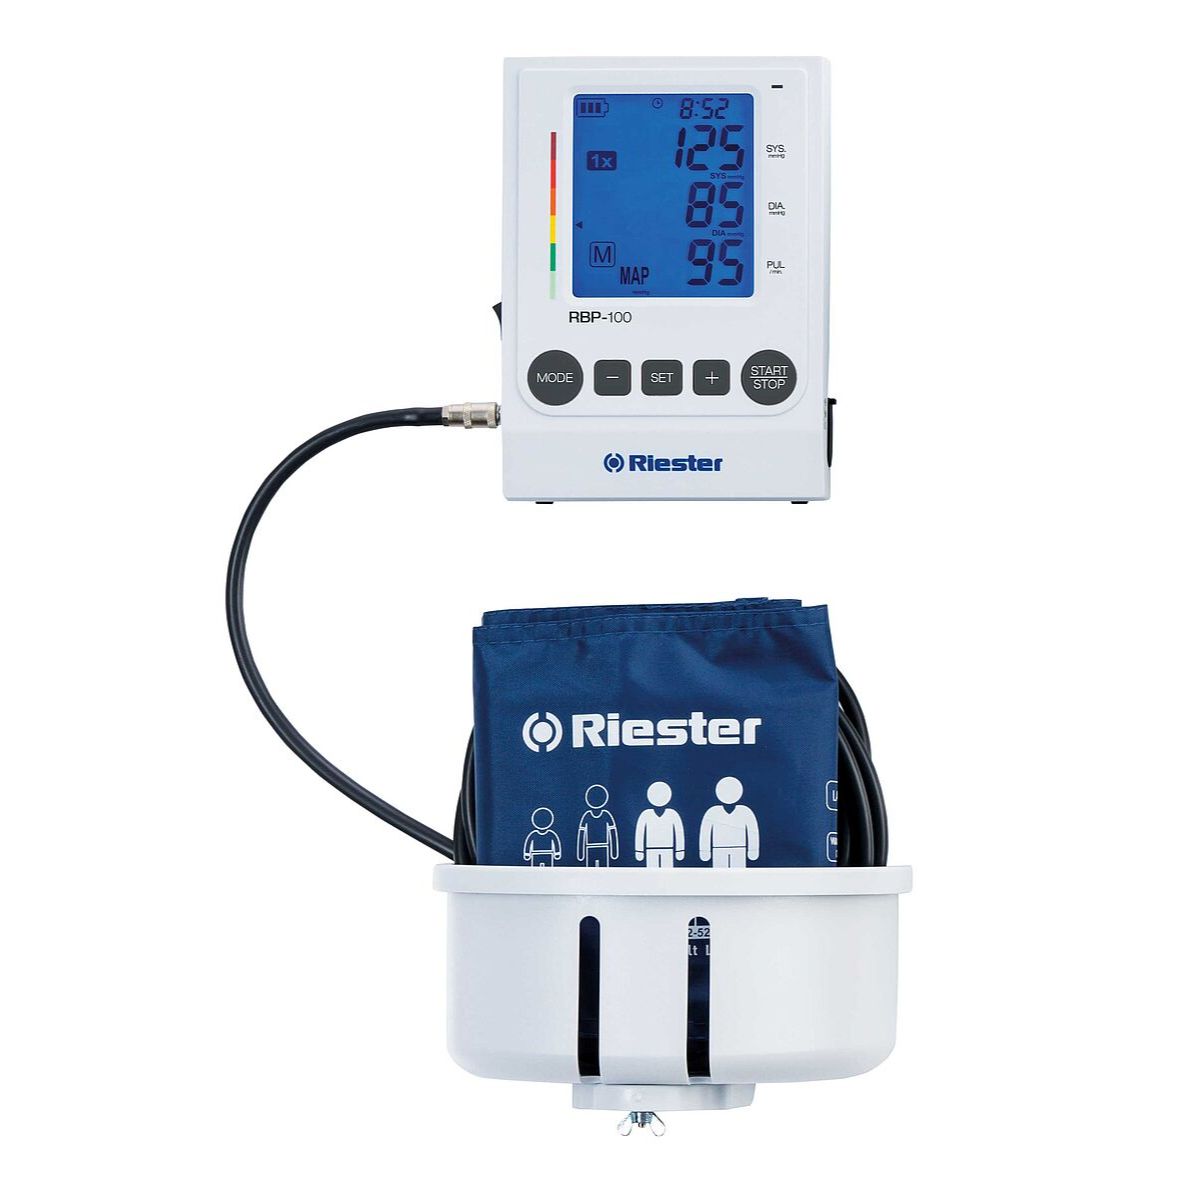 Riester RBP-100 Digital Blood Pressure Monitor